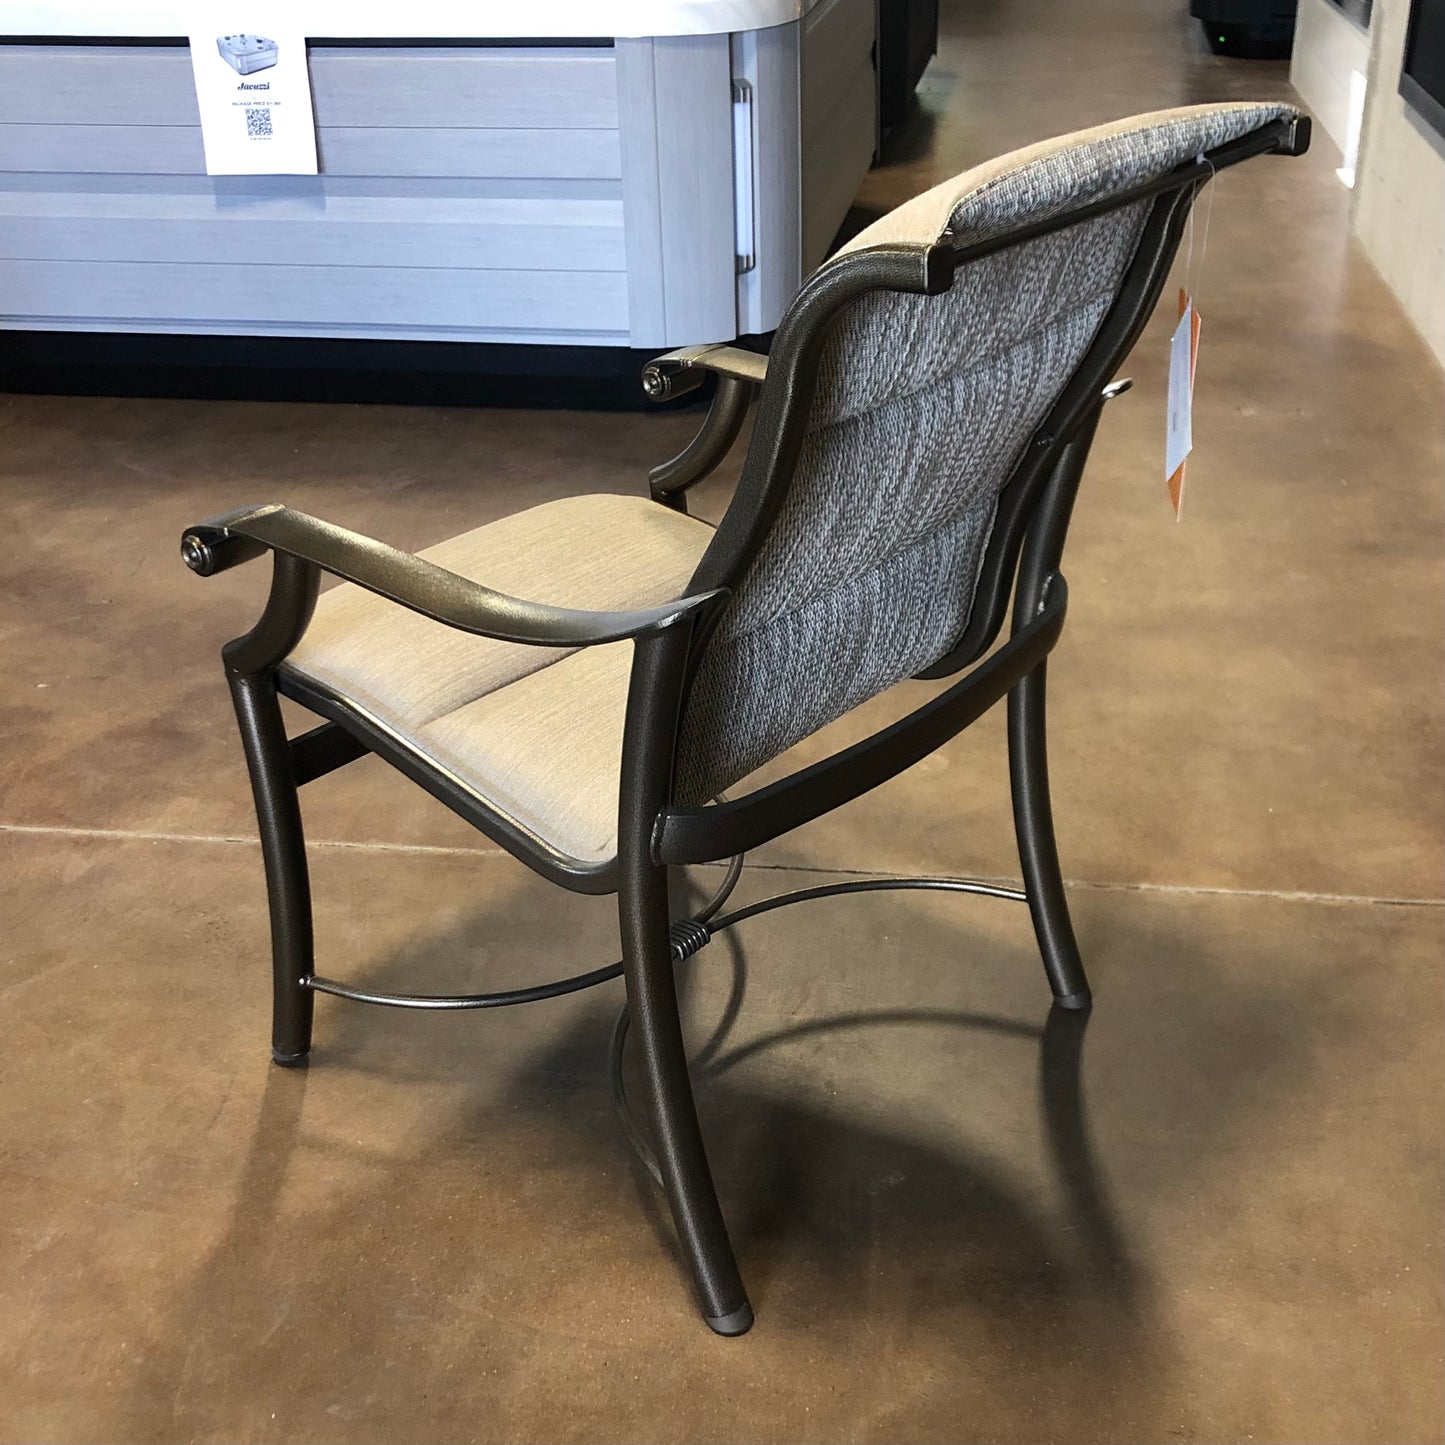 Tropitone Montruex Padded Sling Dining Chair - Aged Bronze / Light Brewed (Display Model)